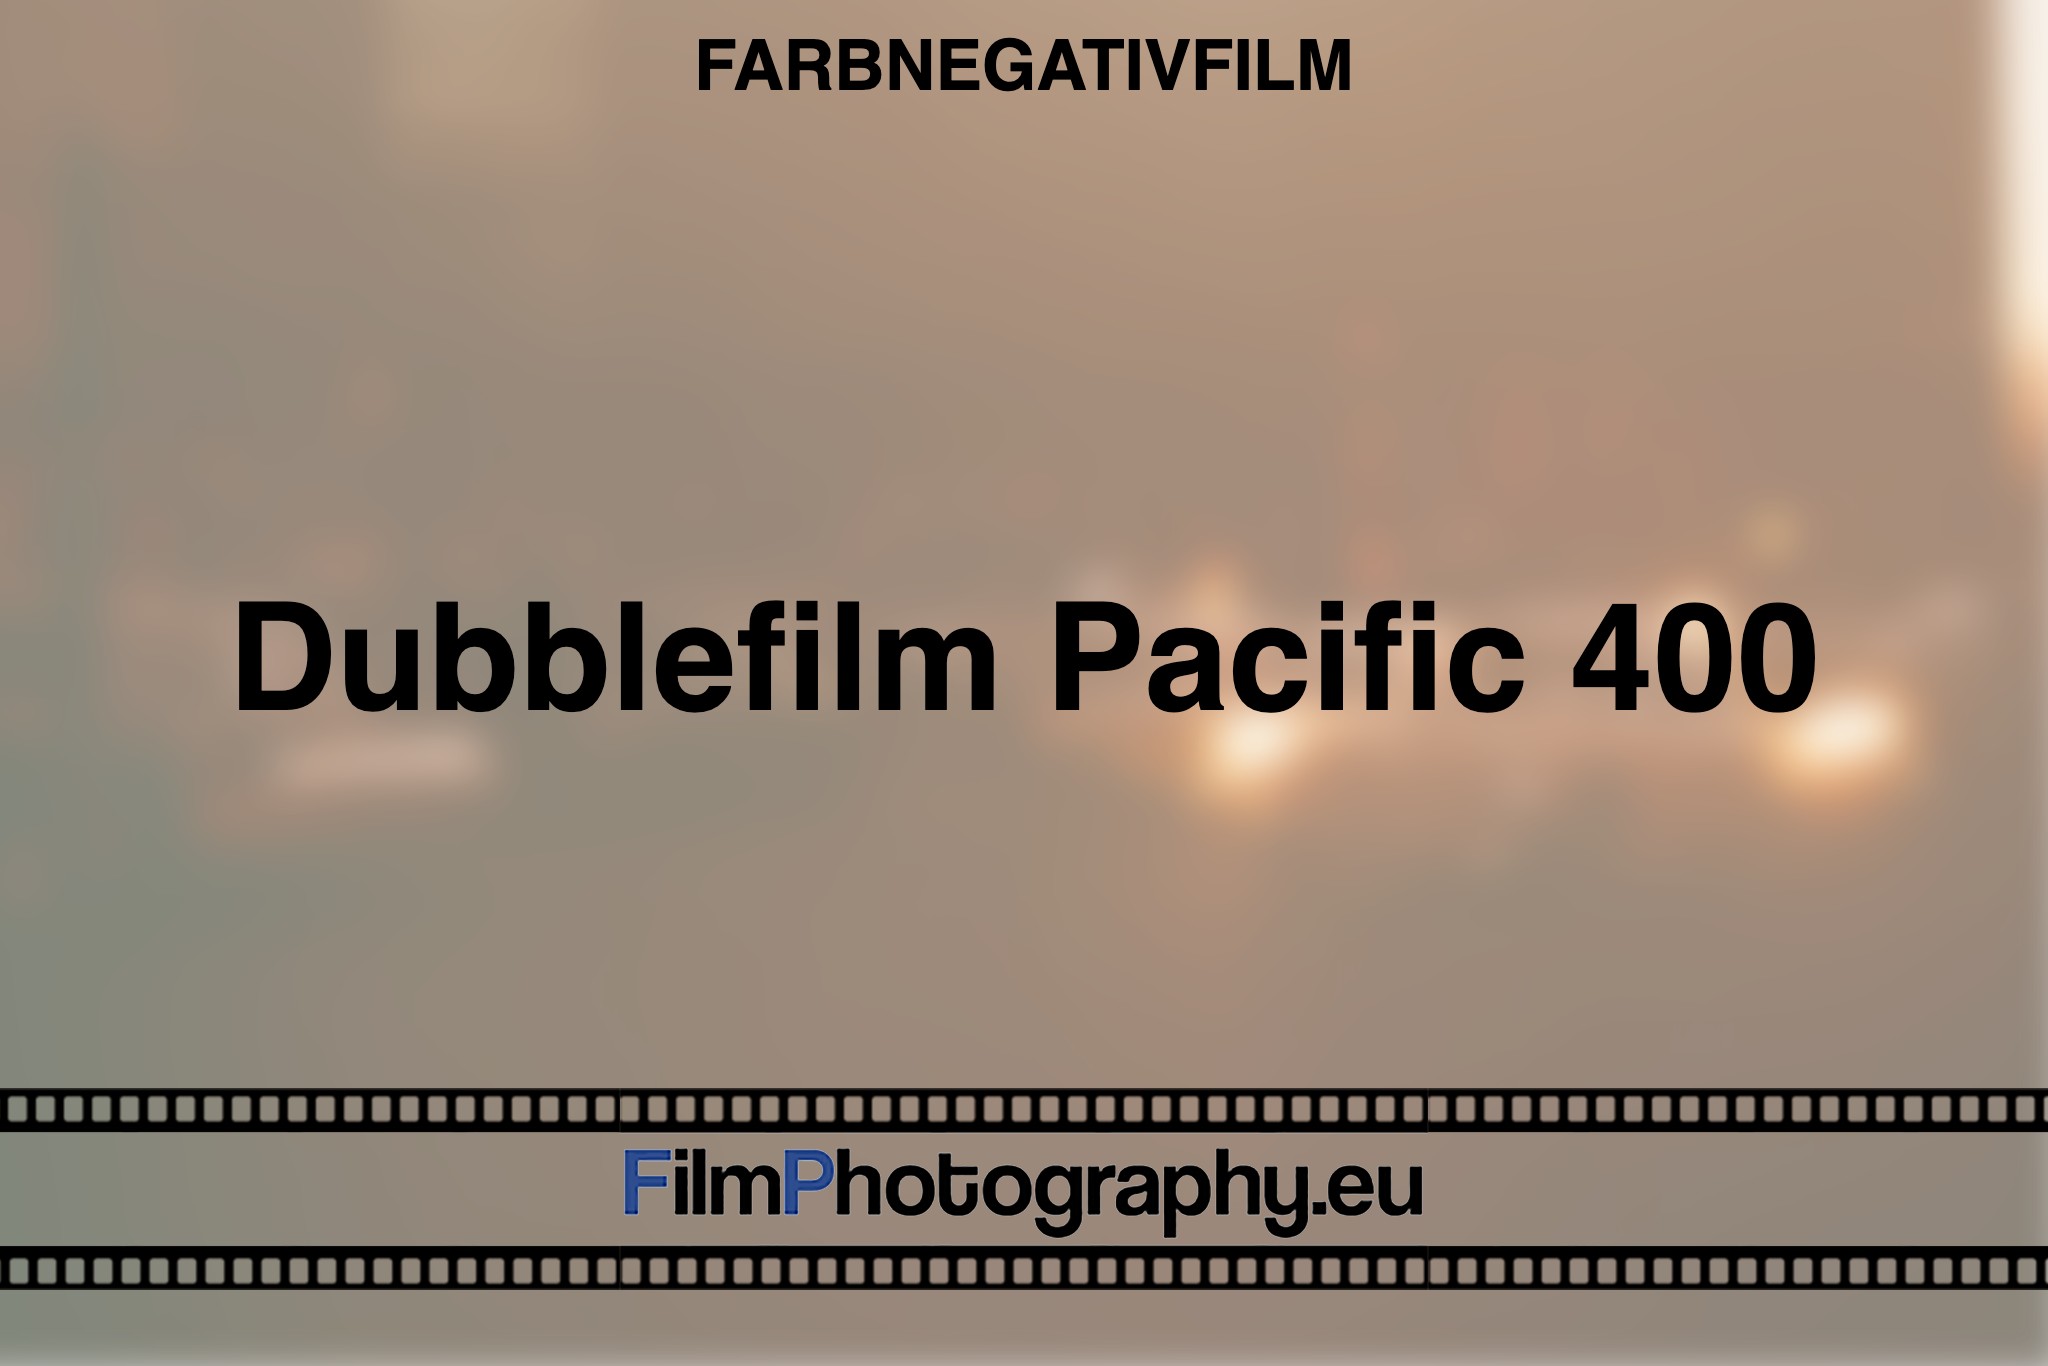 dubblefilm-pacific-400-farbnegativfilm-bnv